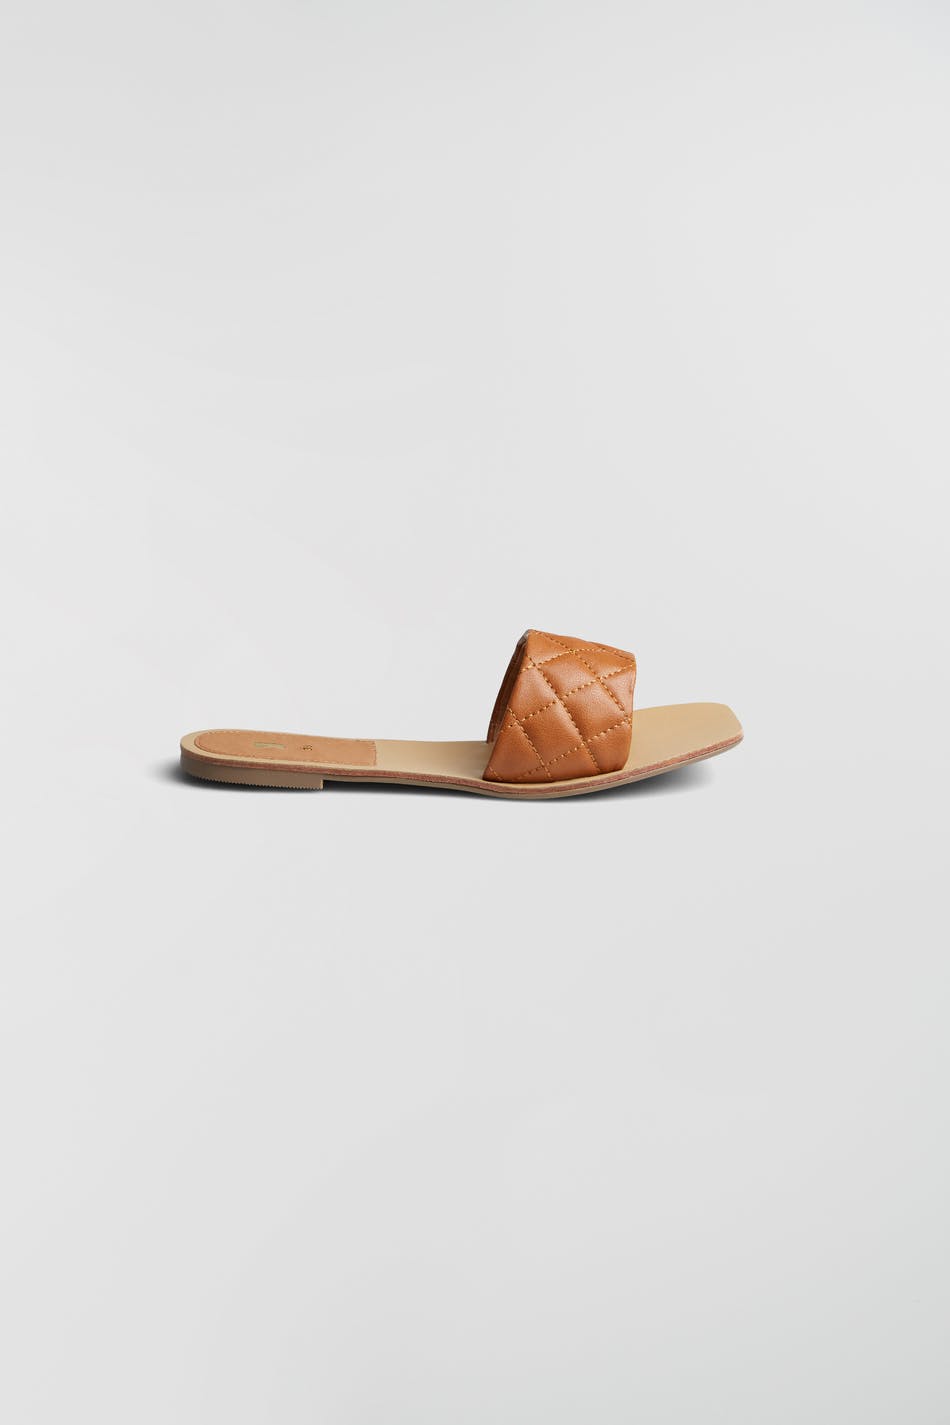 Alara sandals, Gina Tricot